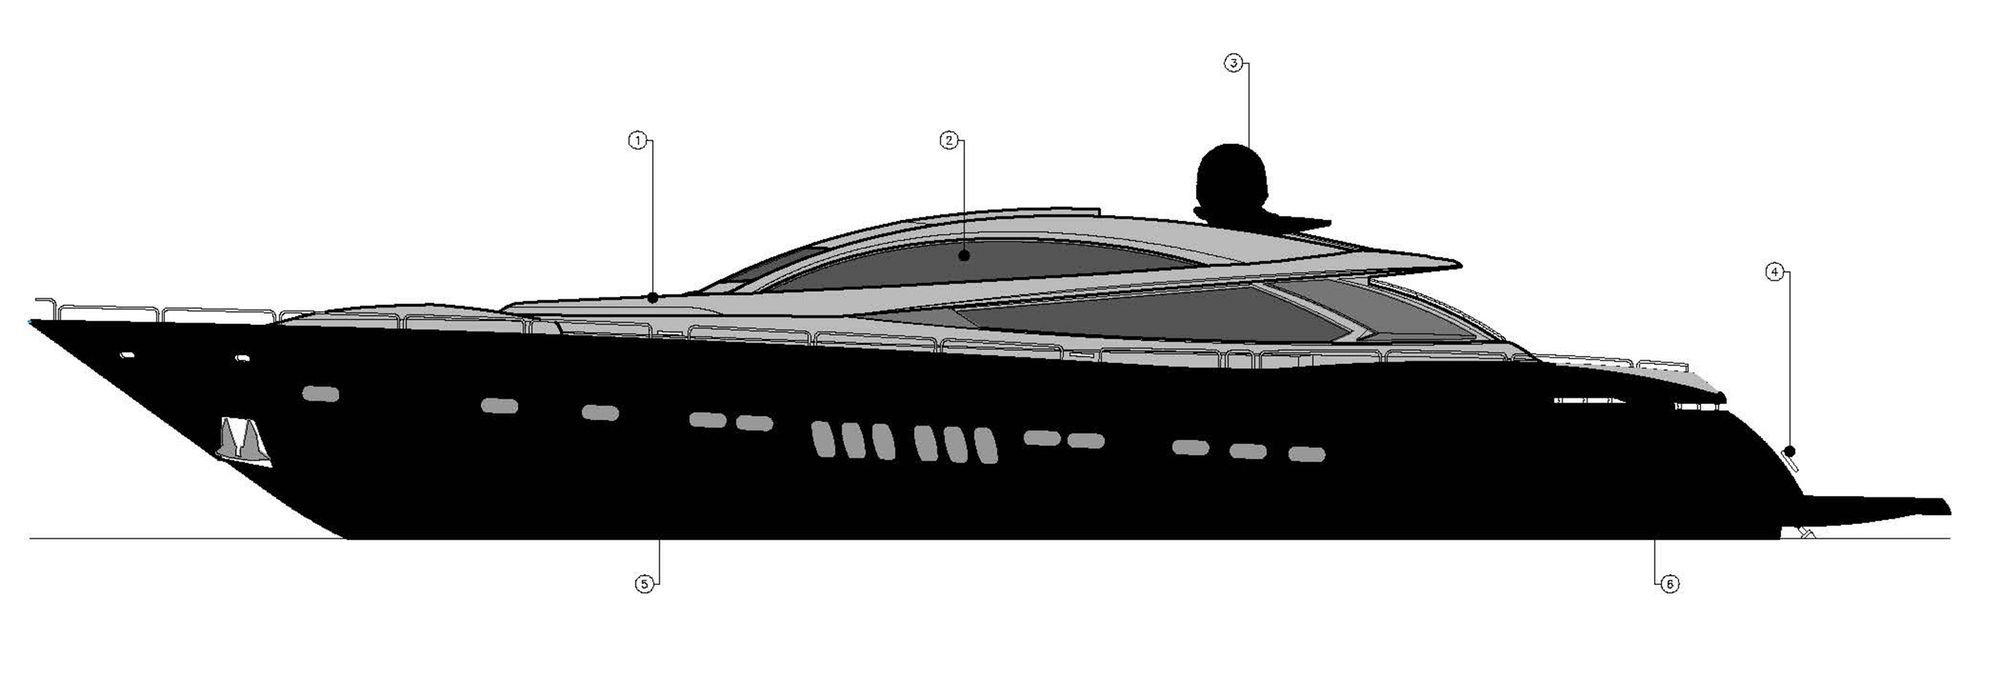 sunseeker predator 108 yacht for sale